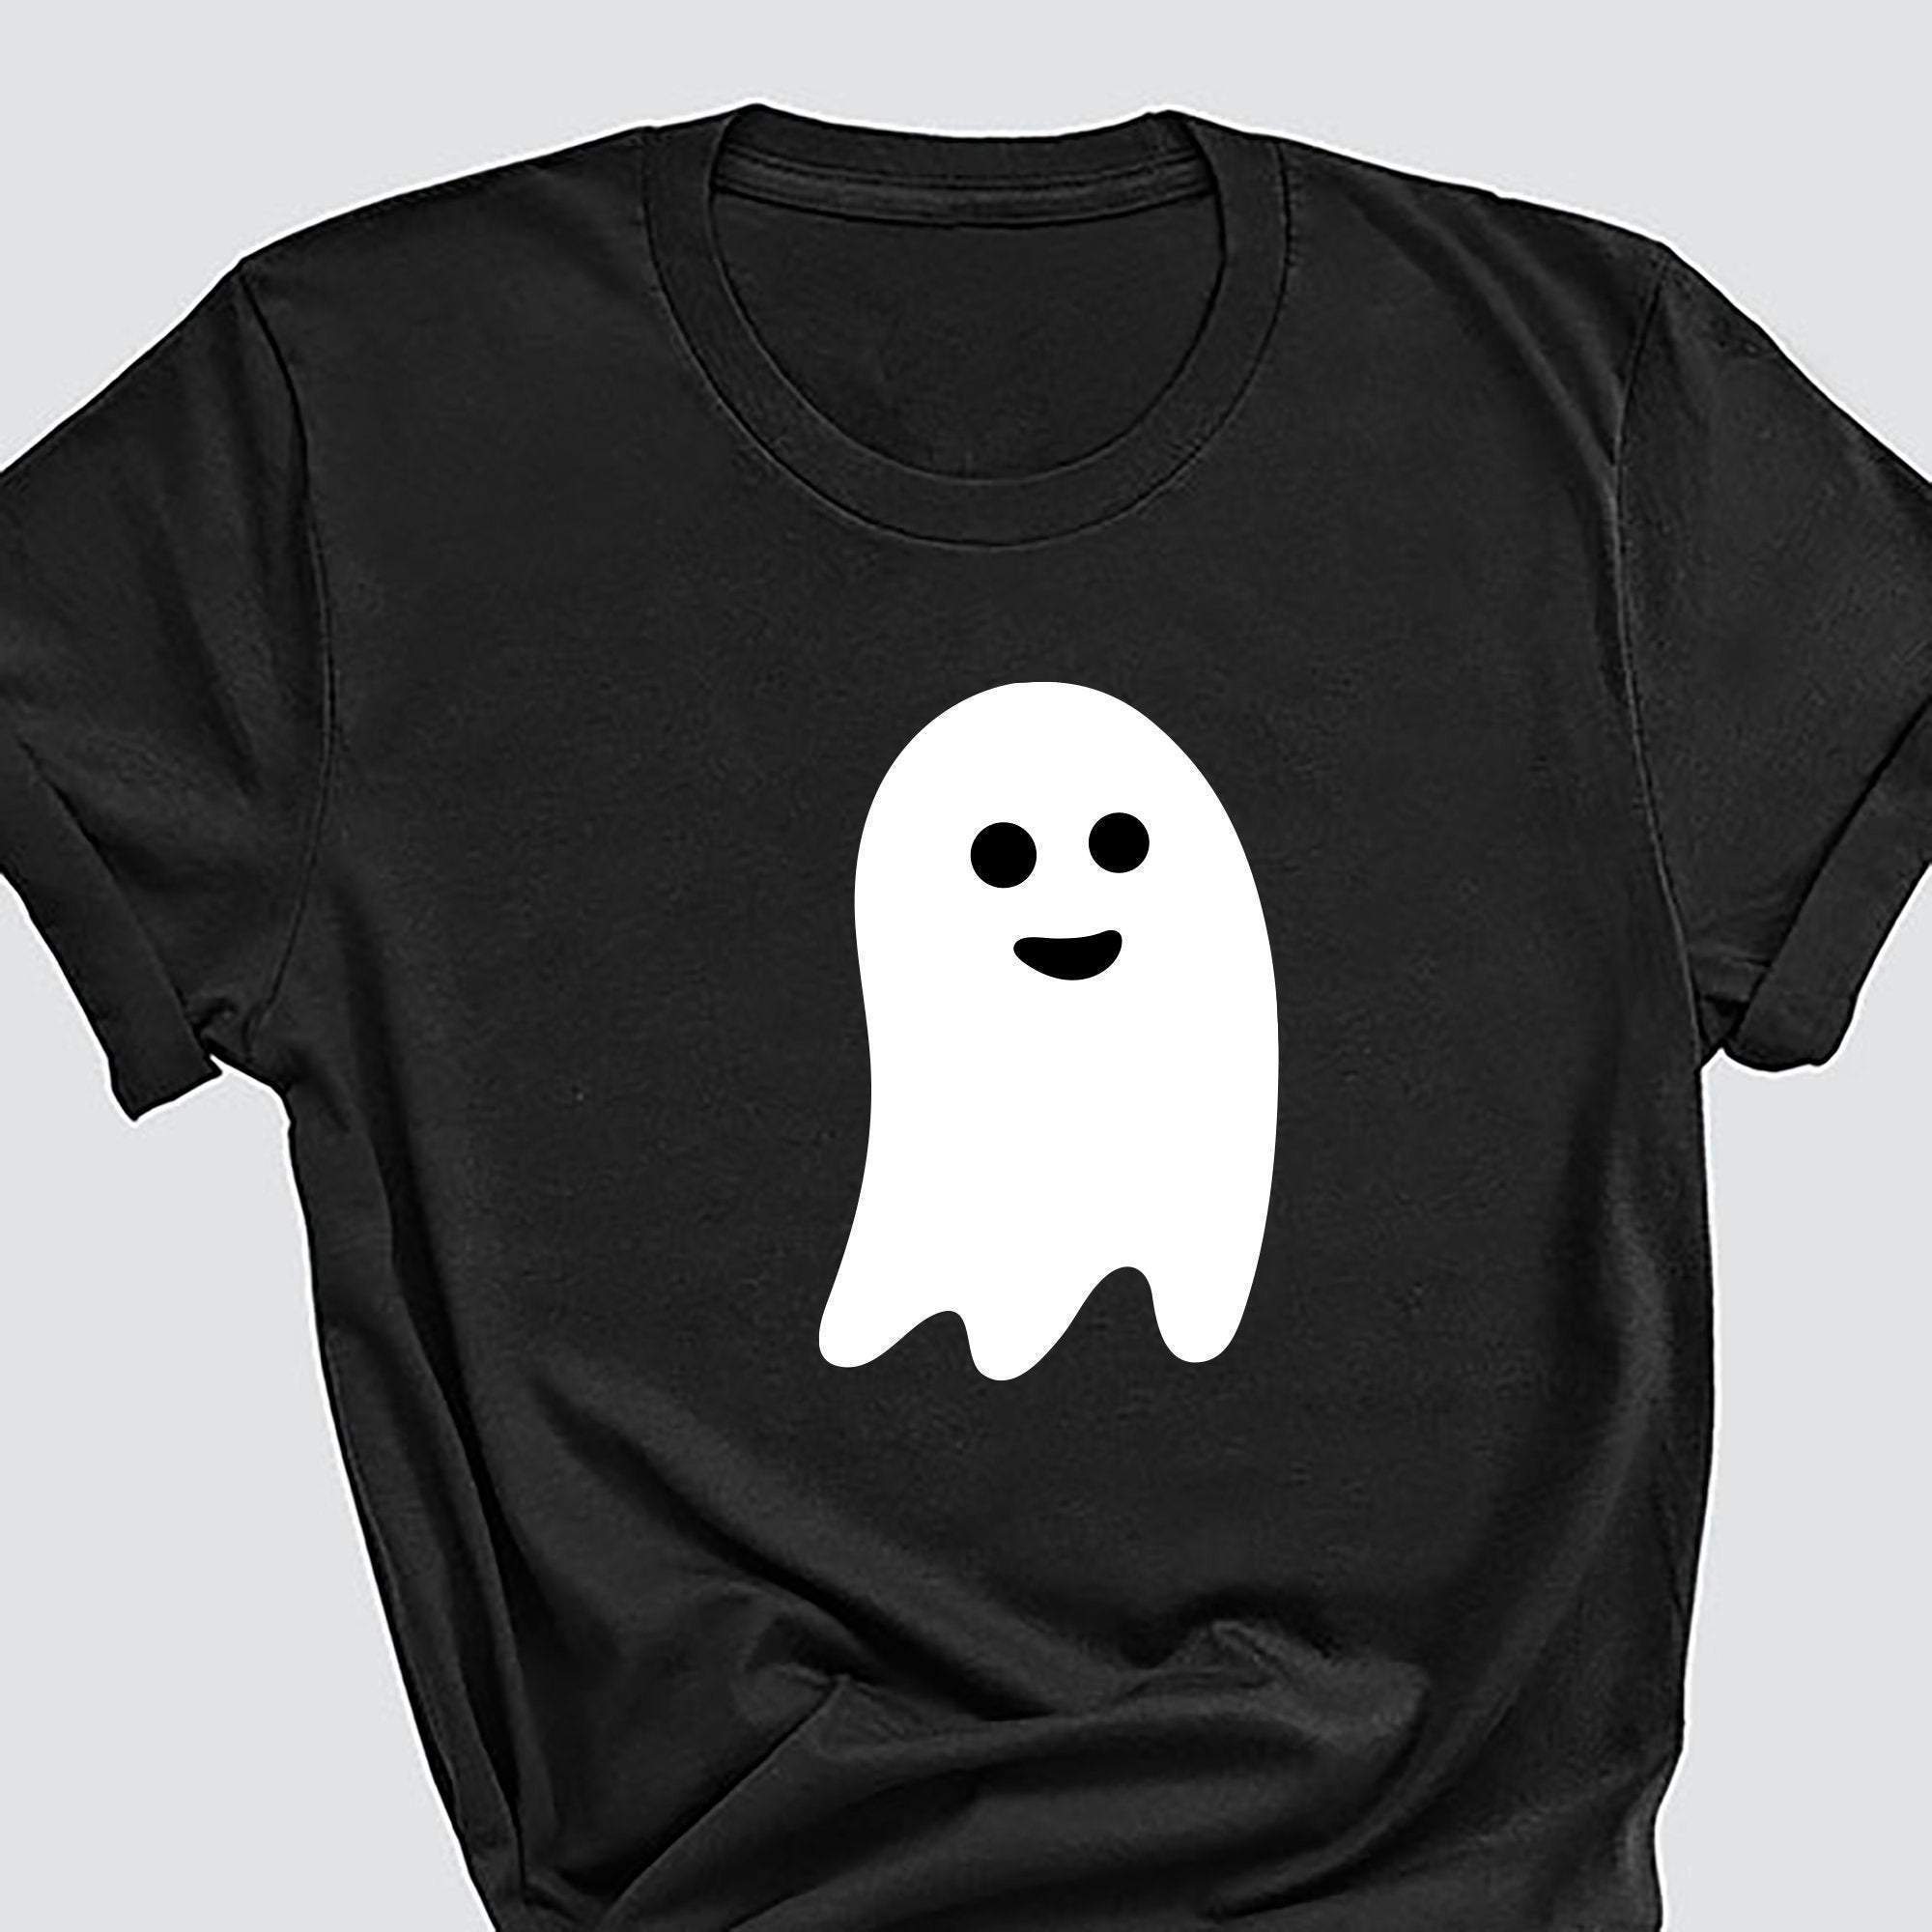 Halloween Costume, Halloween Ghost T-Shirt, Unisex Adult Sizes